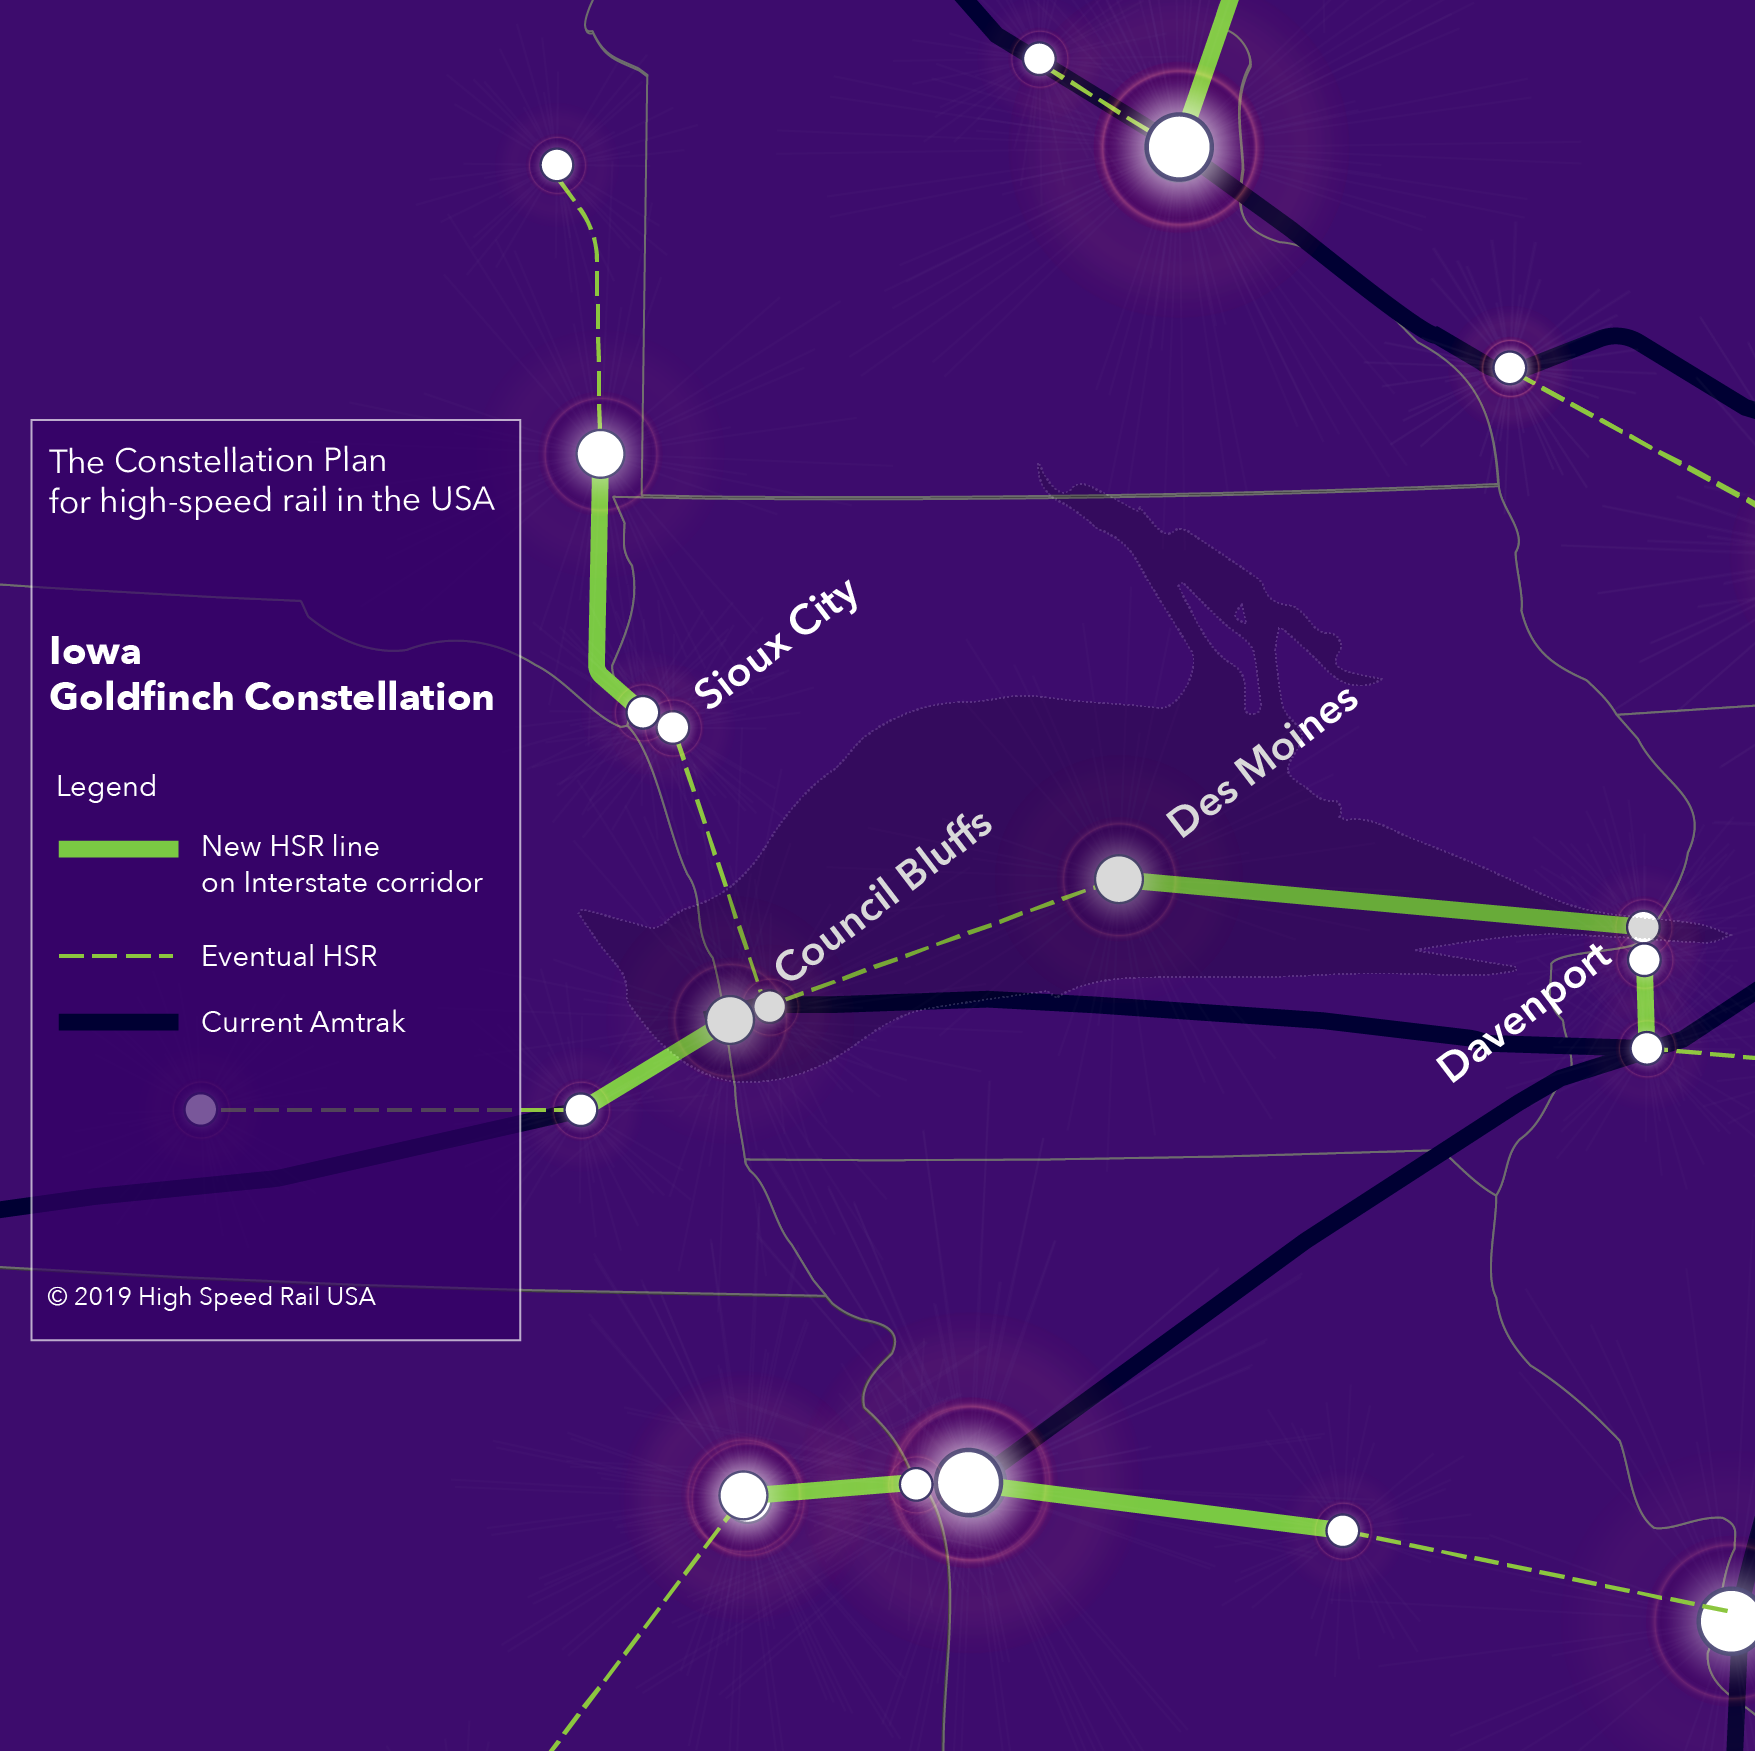 Iowa - The Goldfinch Constellation for high-speed rail